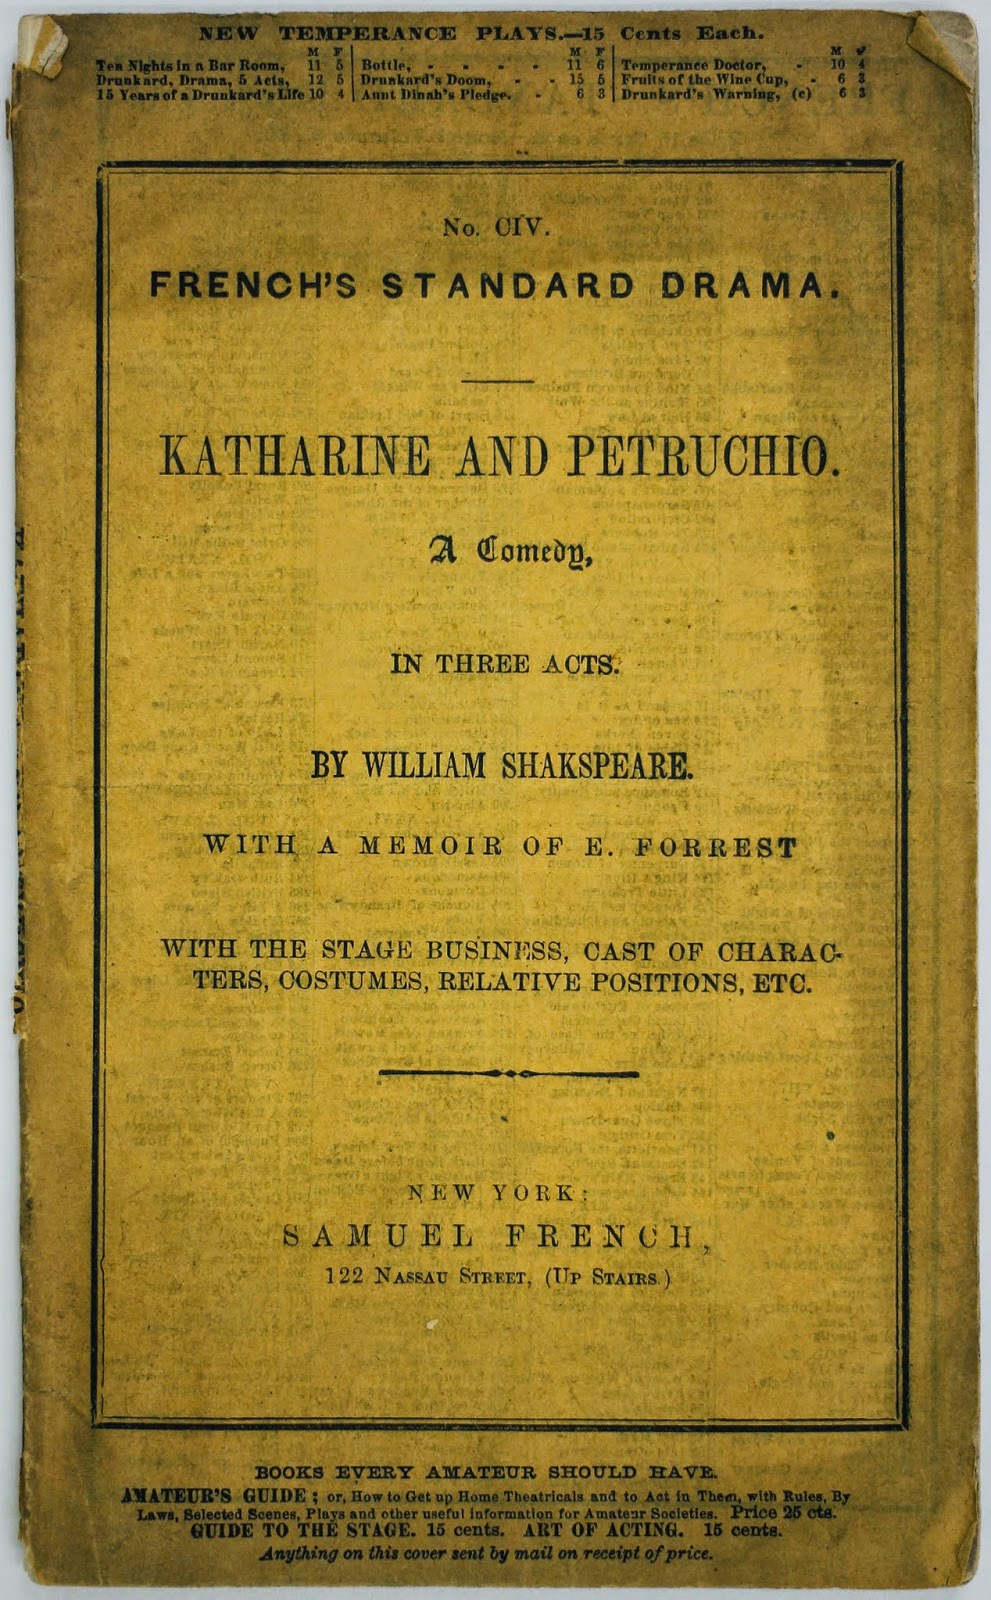 Katherine and Petruchio